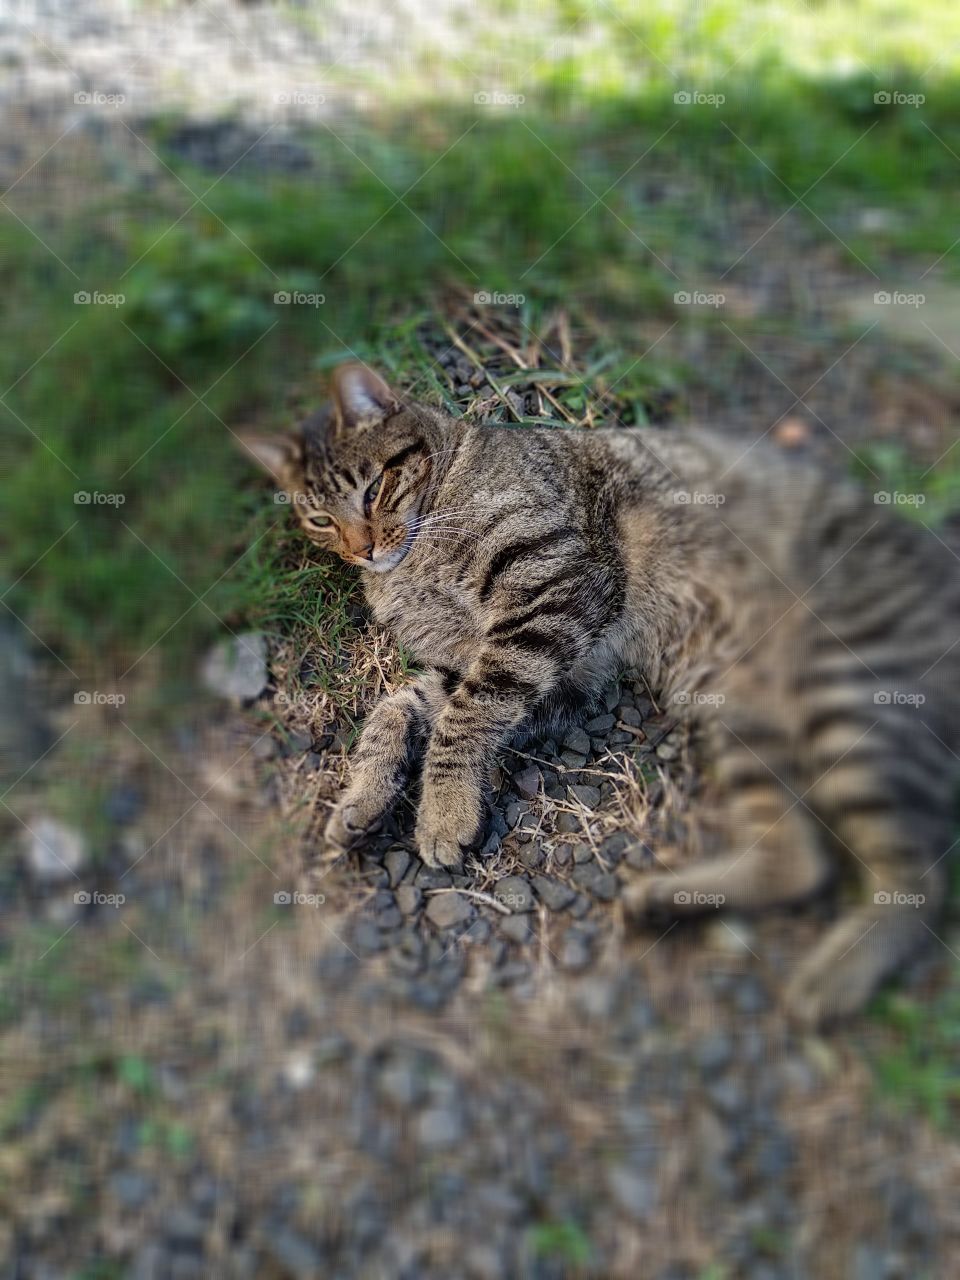 cat enjoying outside catio grass